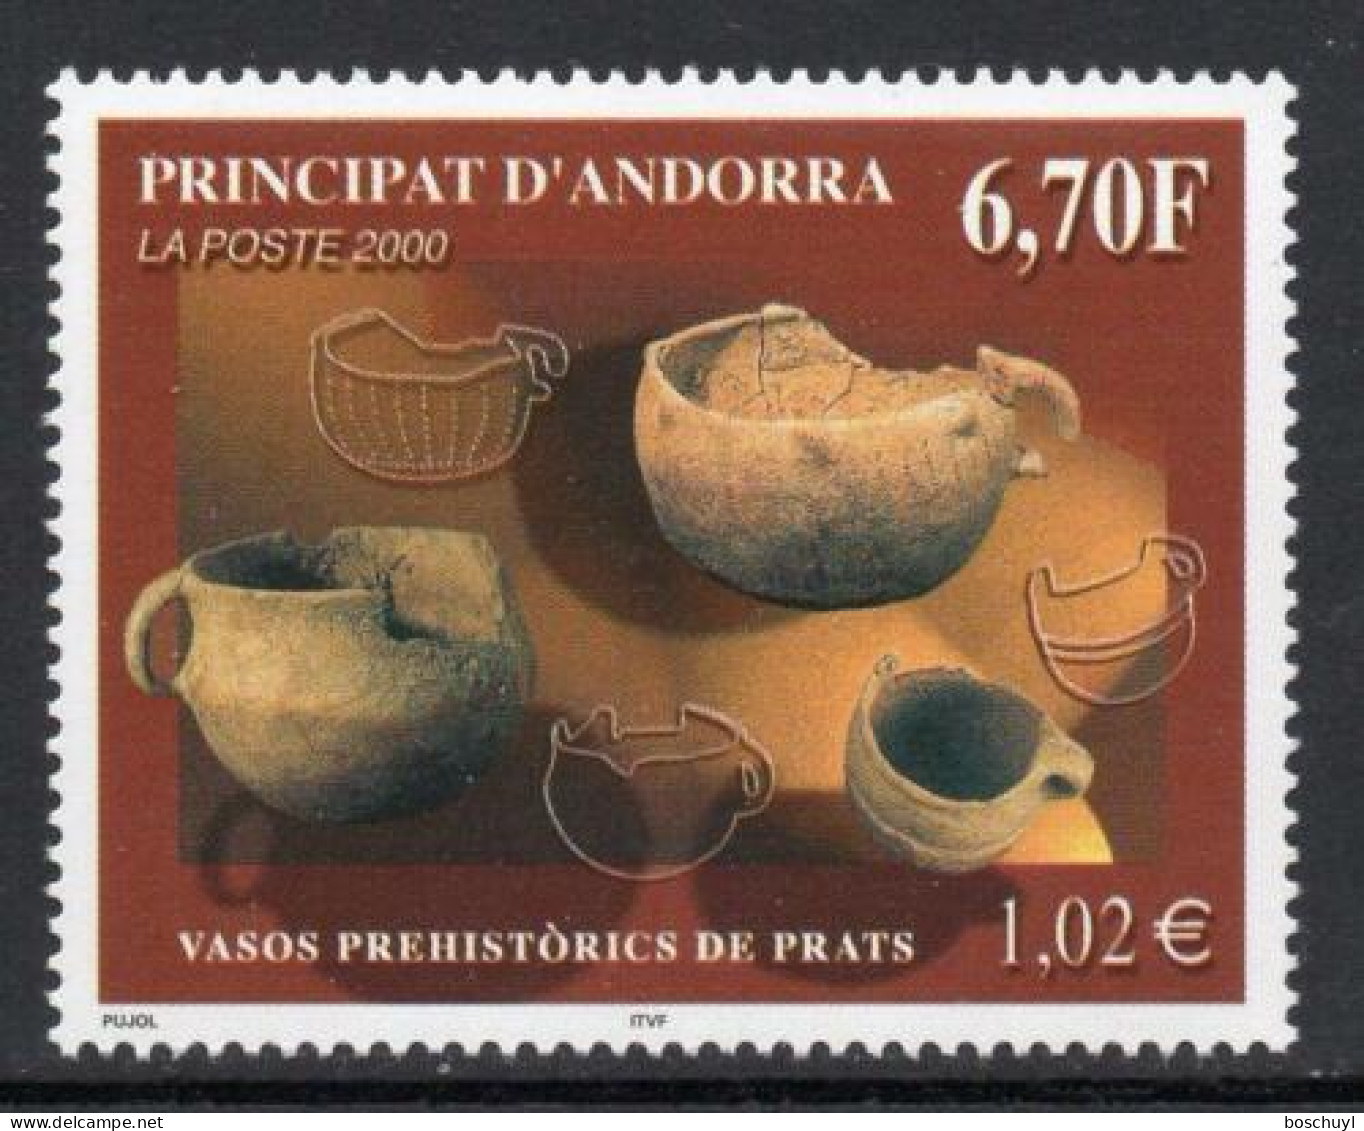 Andorra, French, 2000, Prehistoric Pottery, Ceramics, Archaeology, MNH, Michel 559 - Ungebraucht